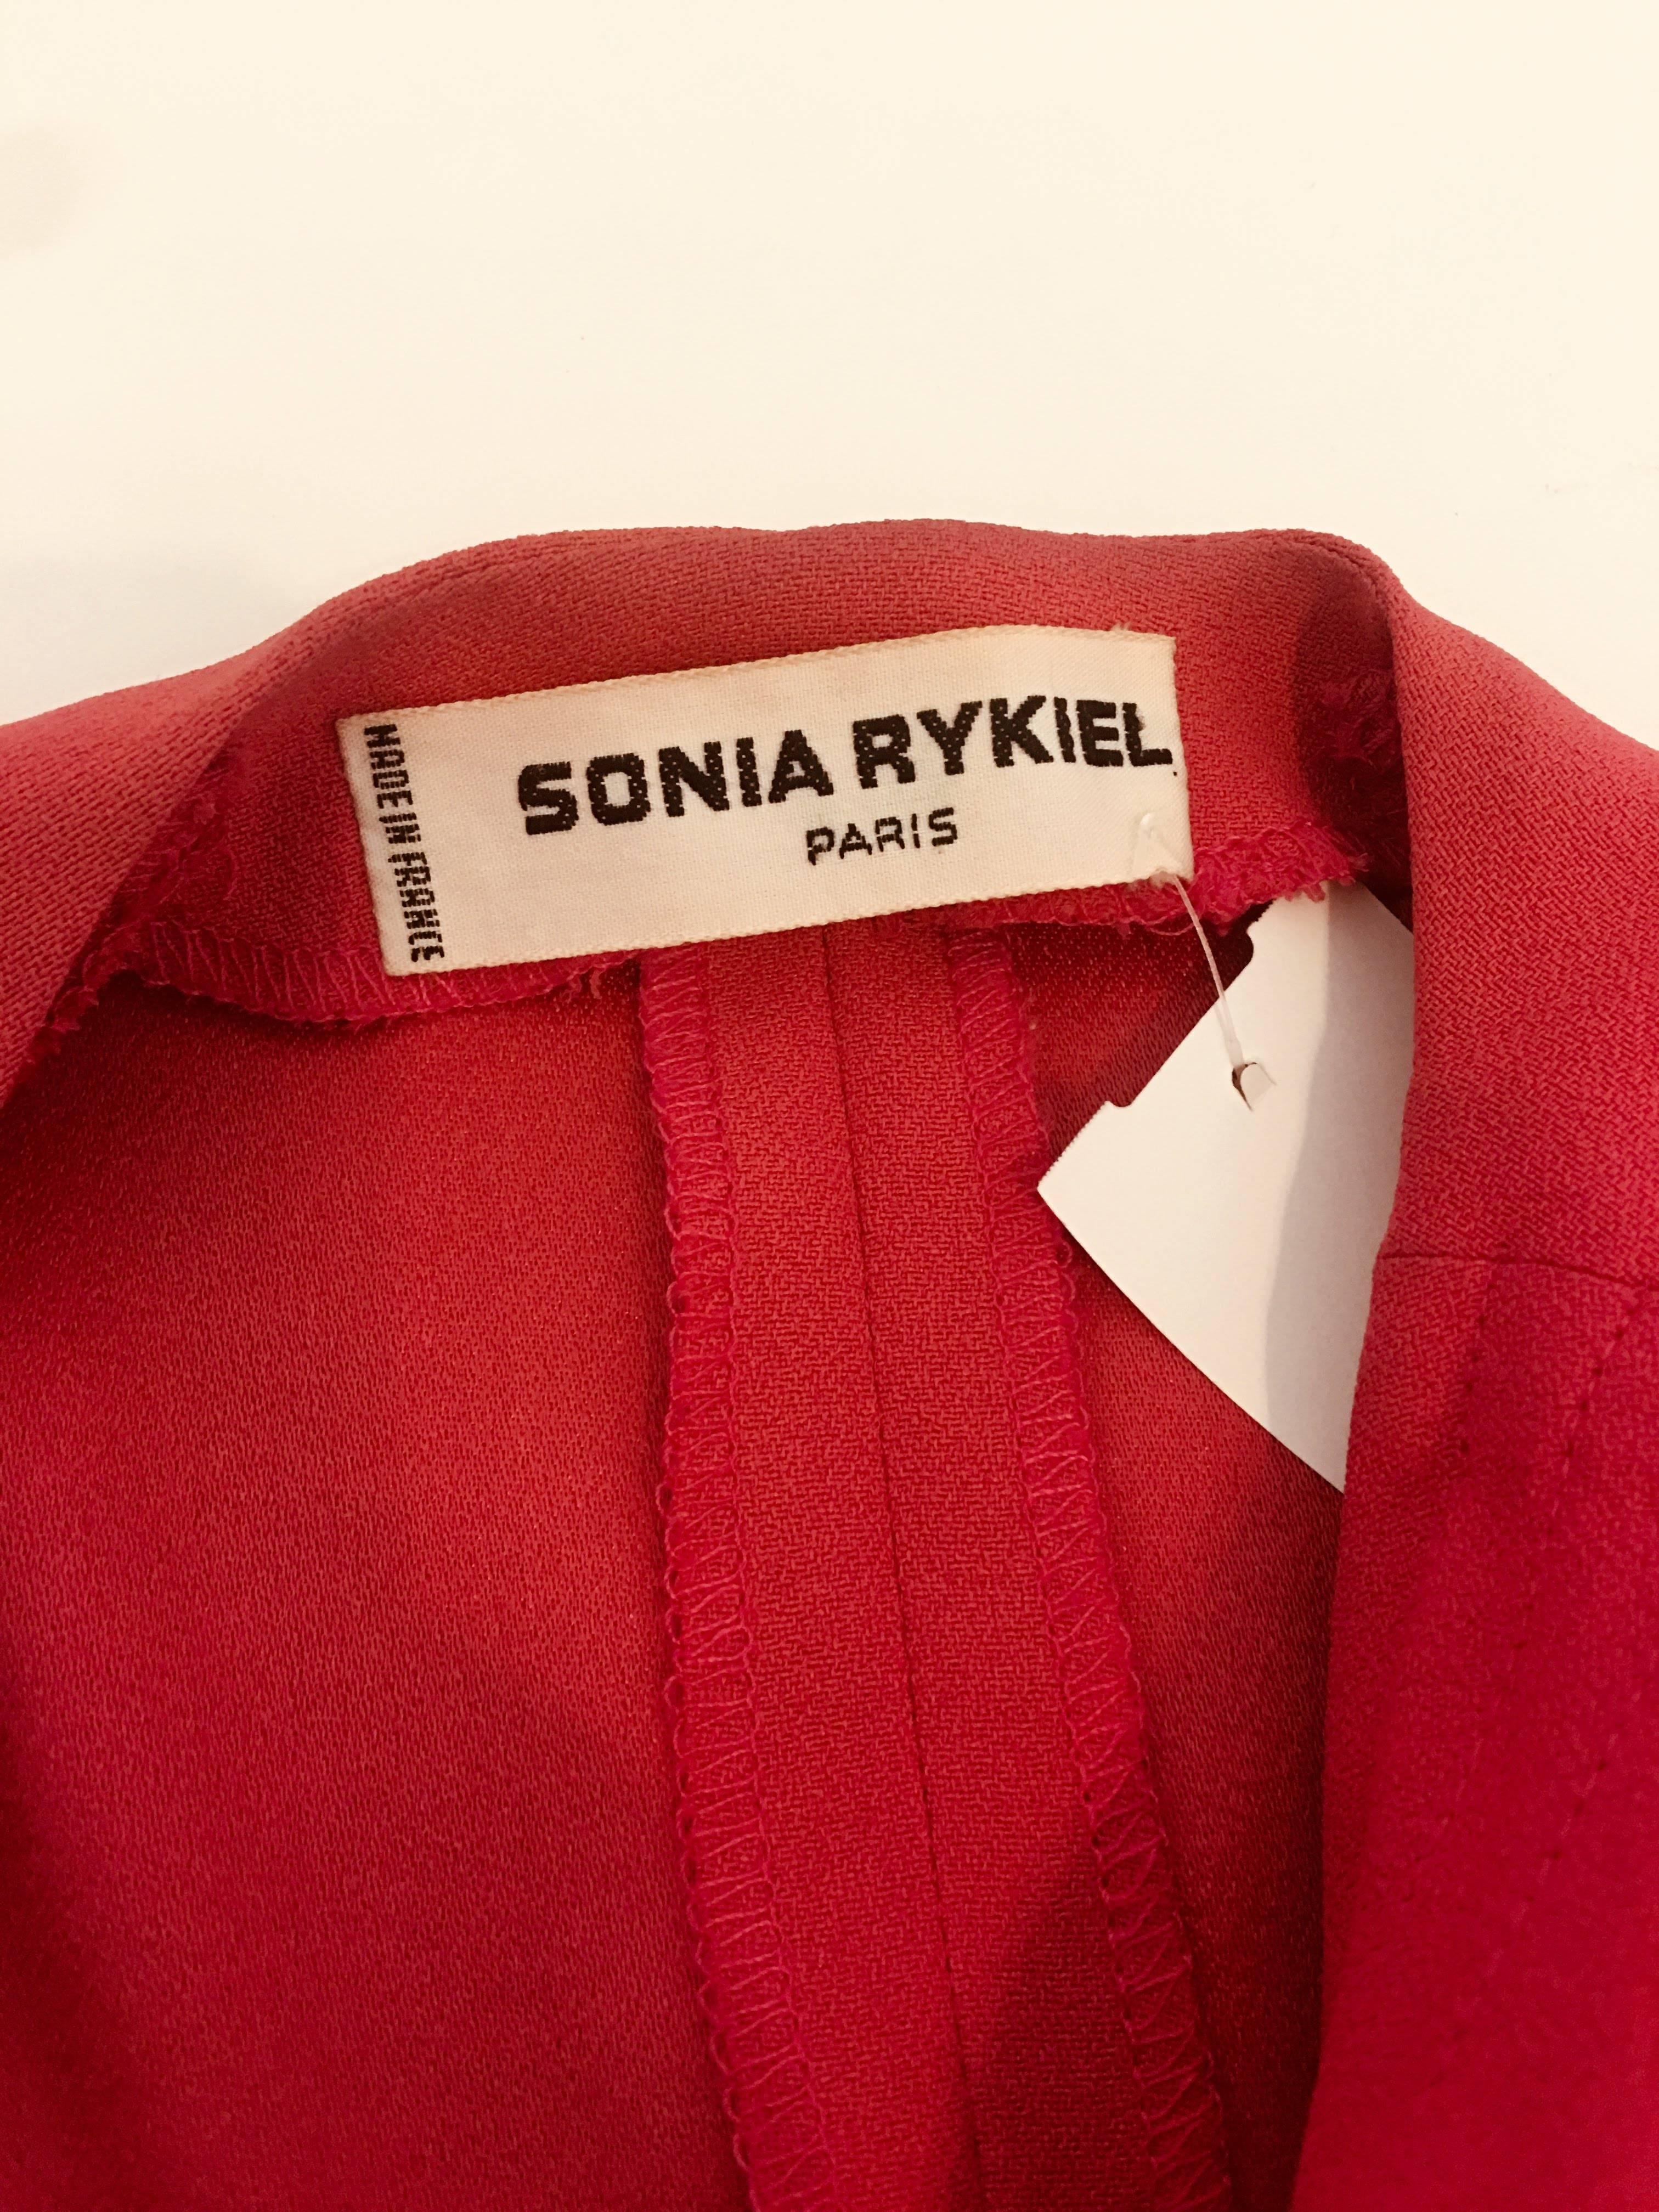 Sonia Rykiel Skirt Suit 7